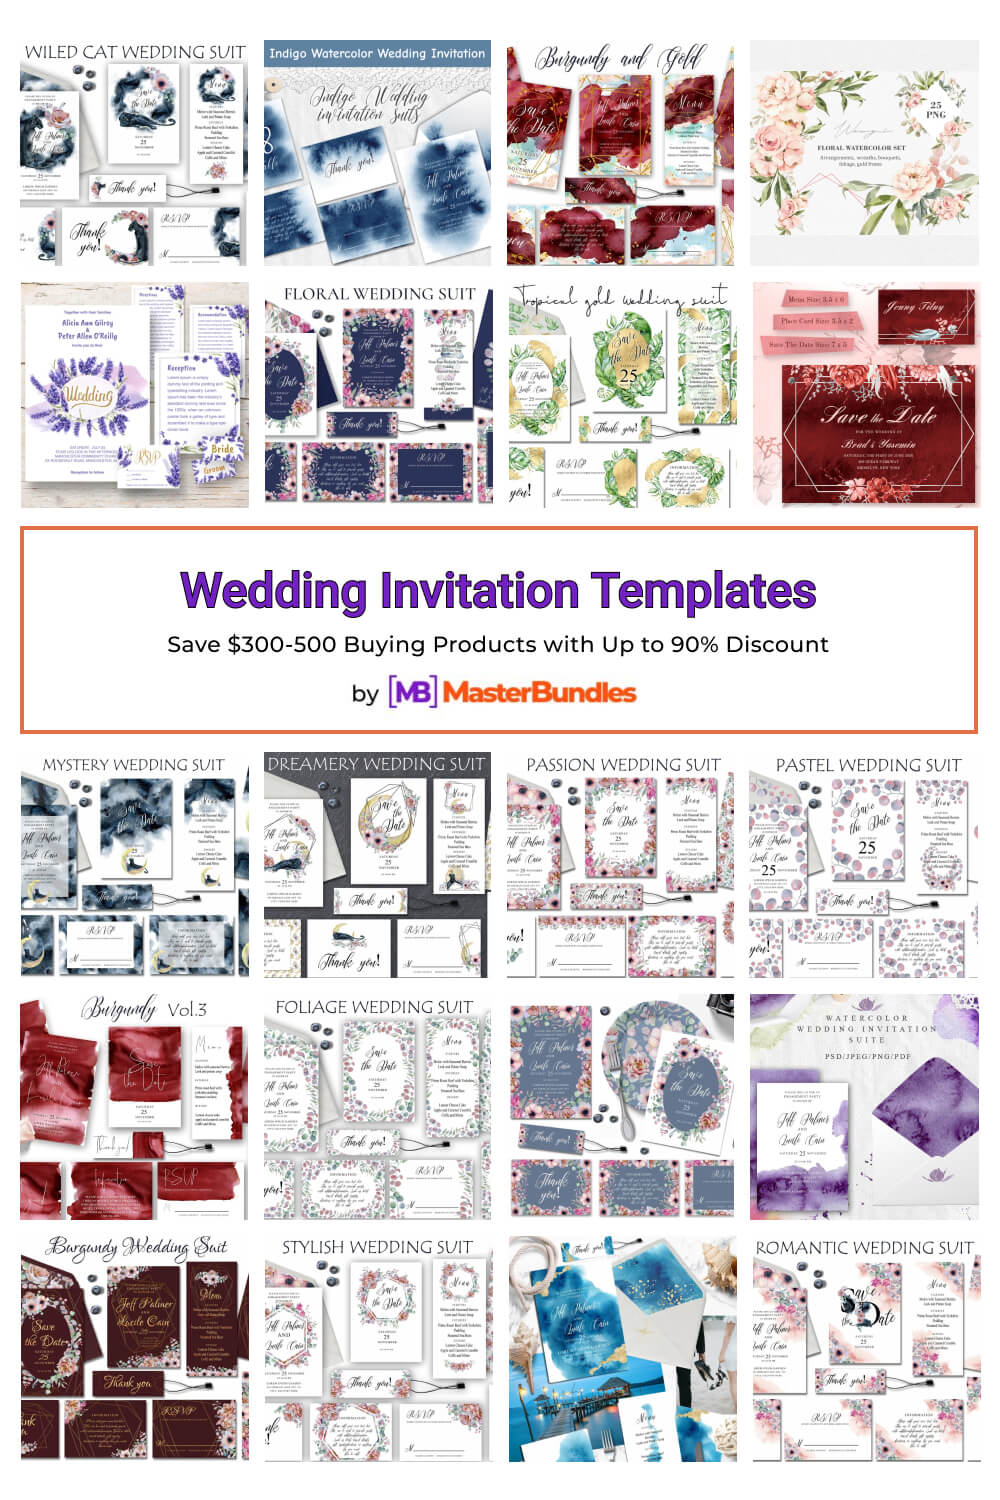 wedding invitation templates pinterest image.